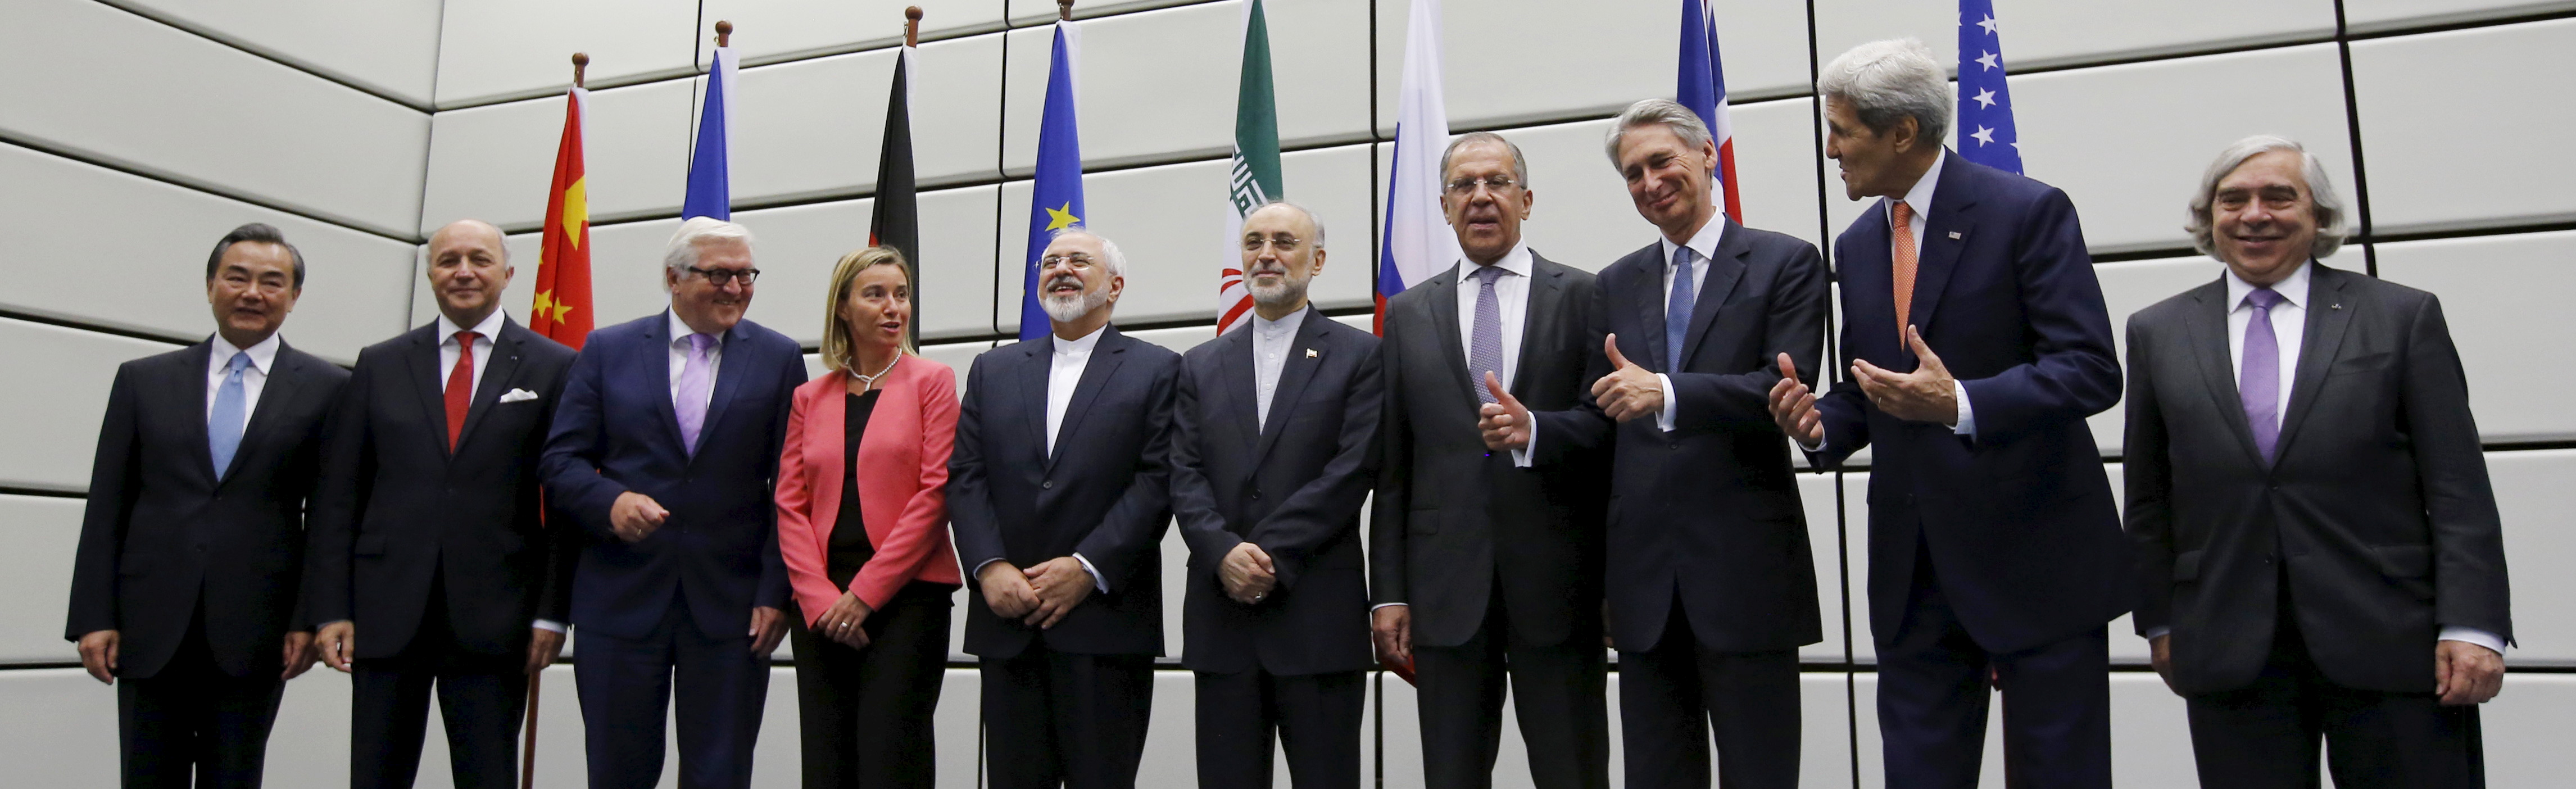 iran_deal_leaders